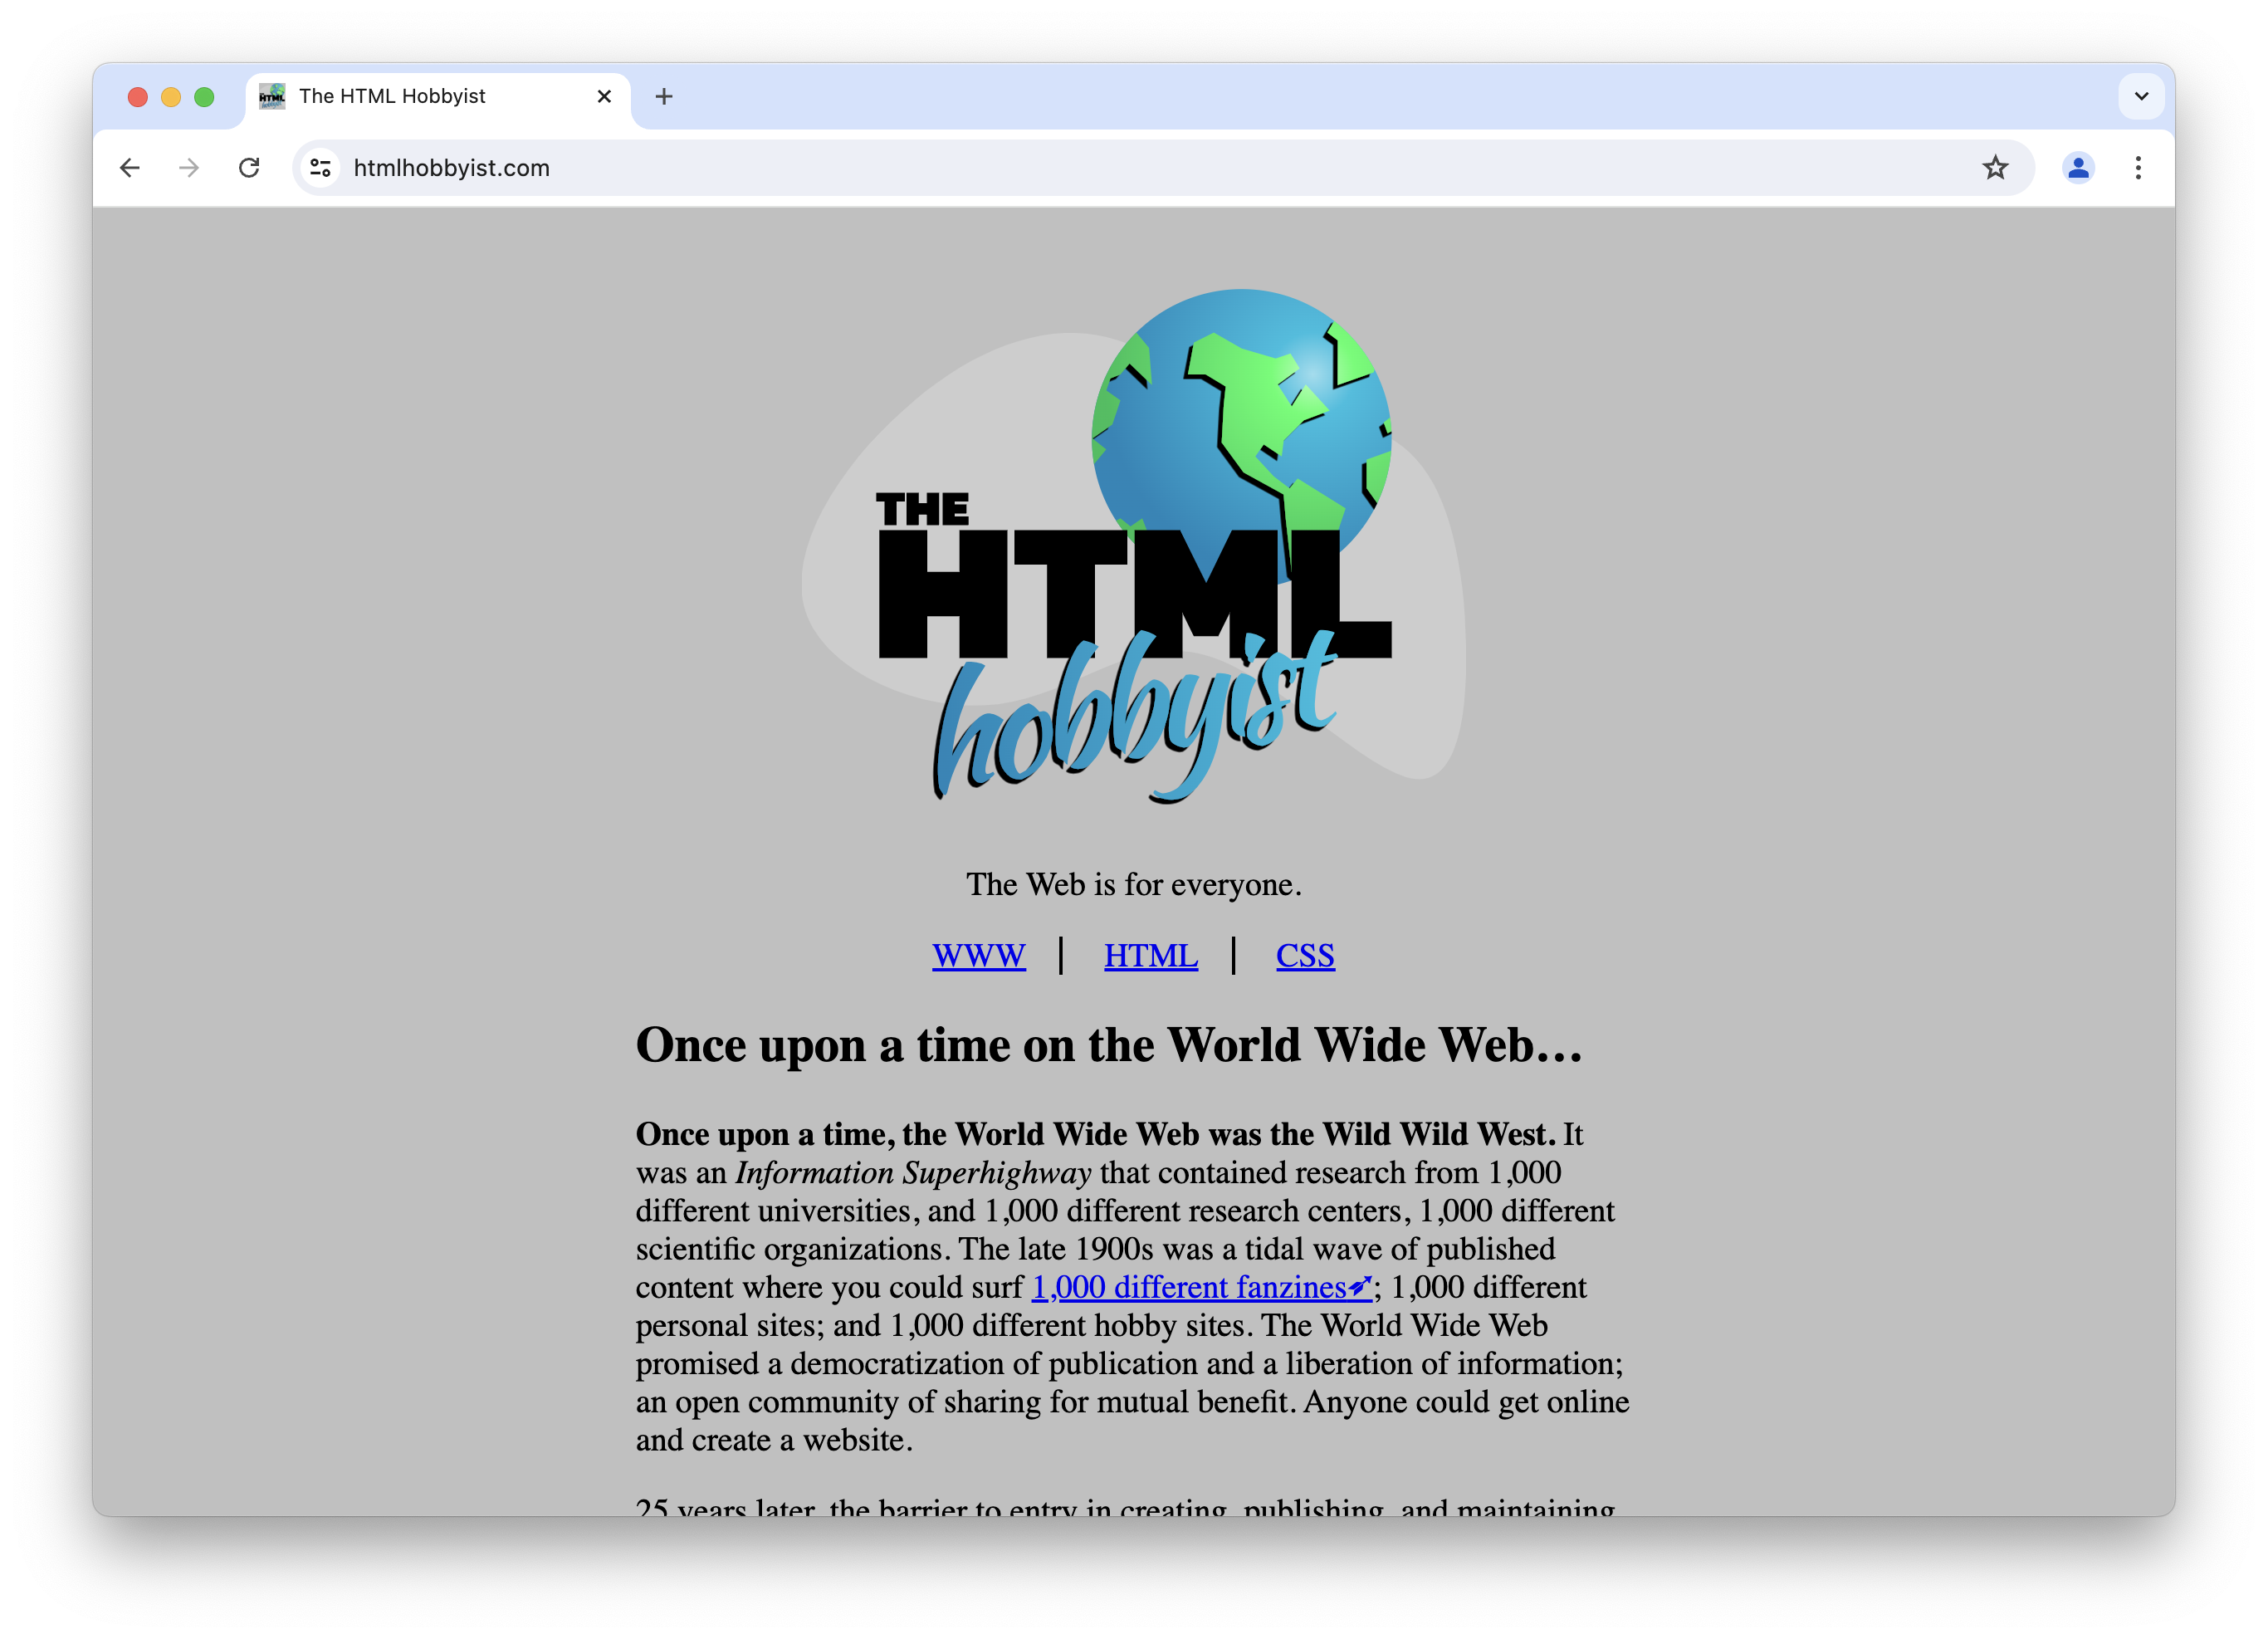 The HTML Hobbyist website